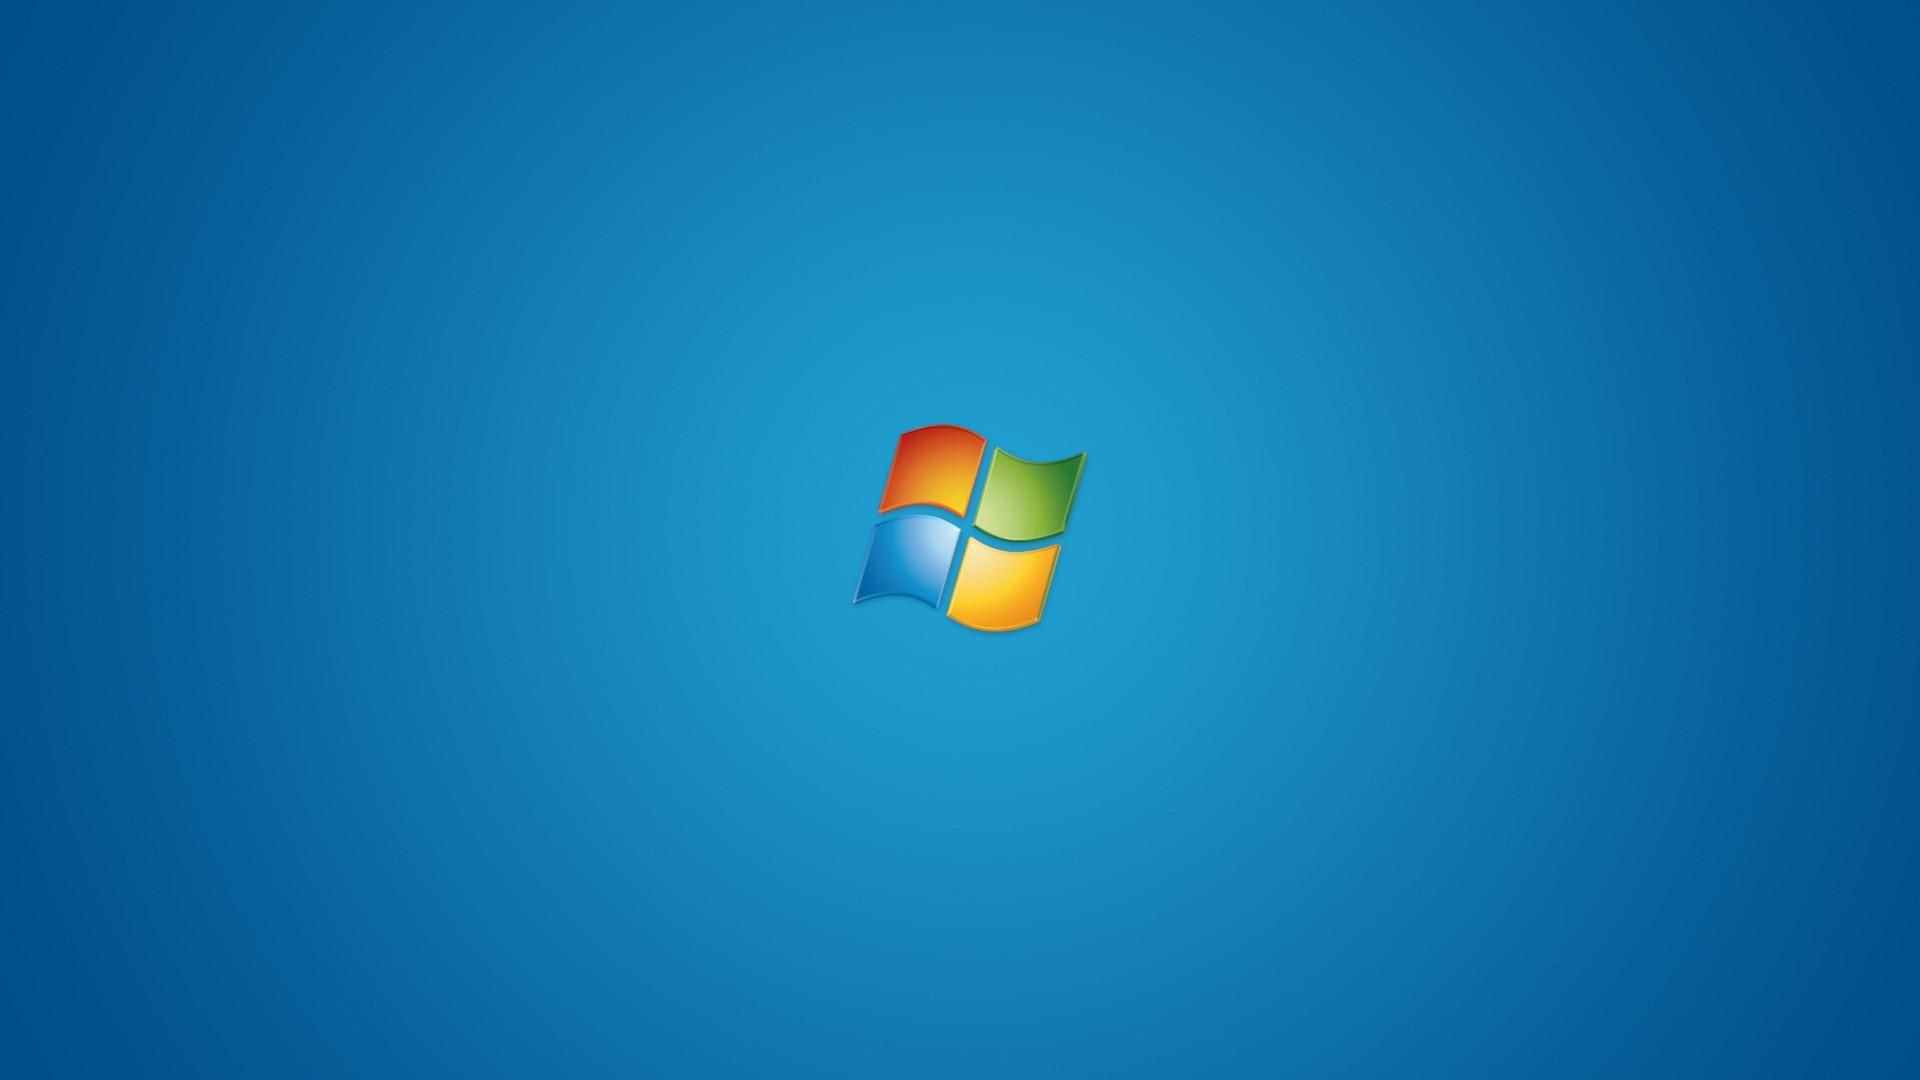 Microsoft Desktop Wallpaper Download Free | HD Wallpapers Range